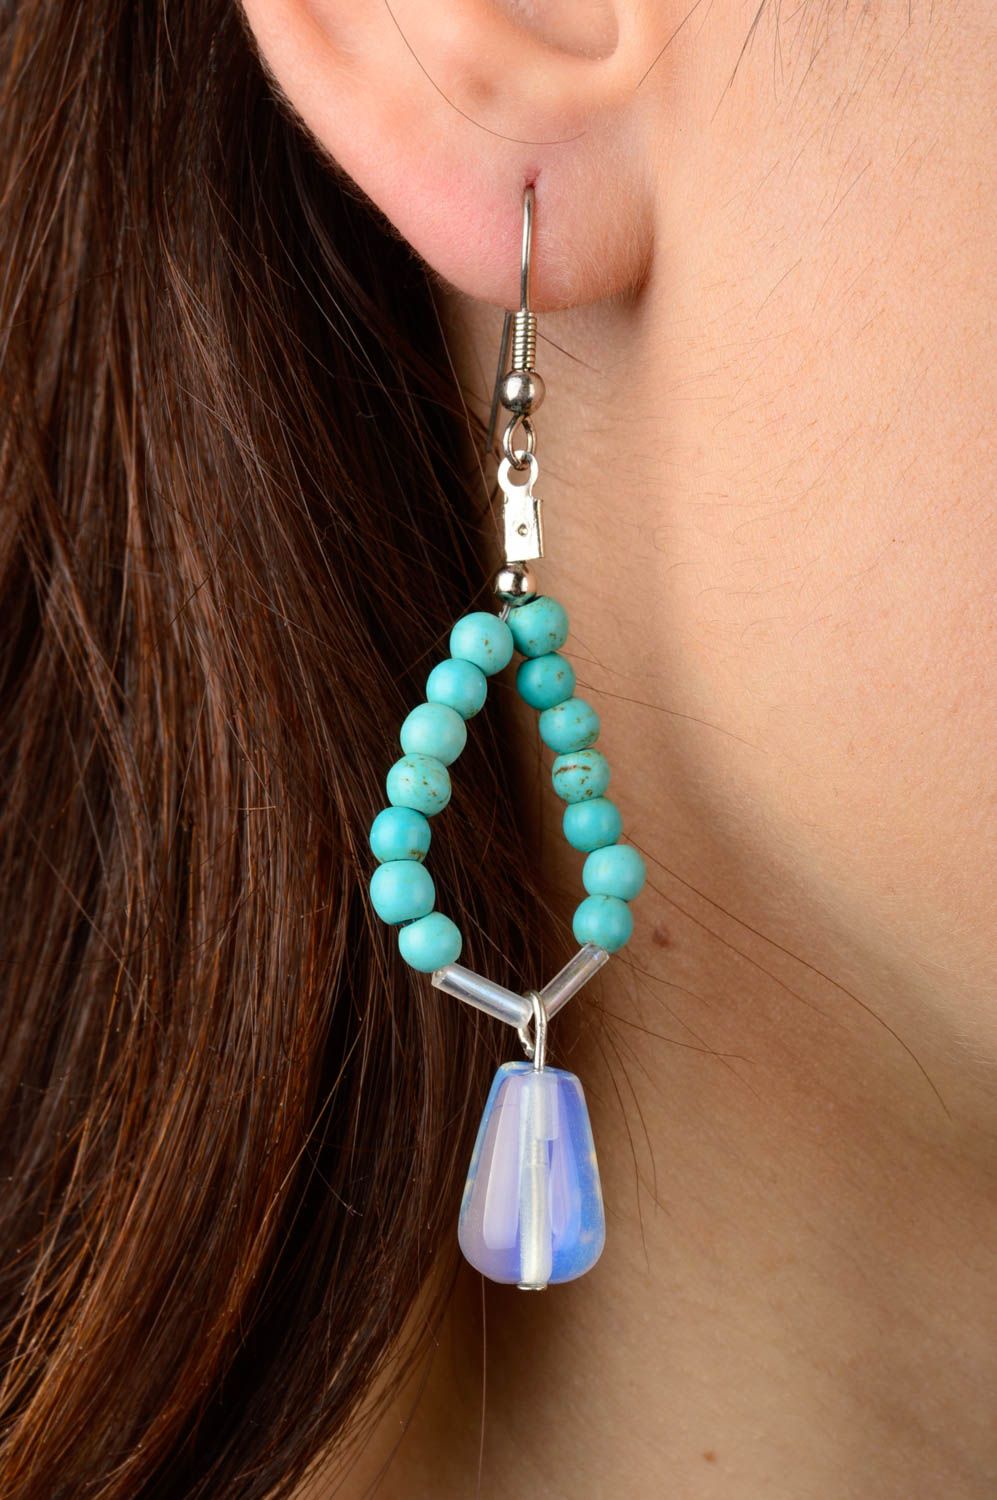 Handmade earrings designer earrings unusual jewelry beaded earrings with charms photo 2